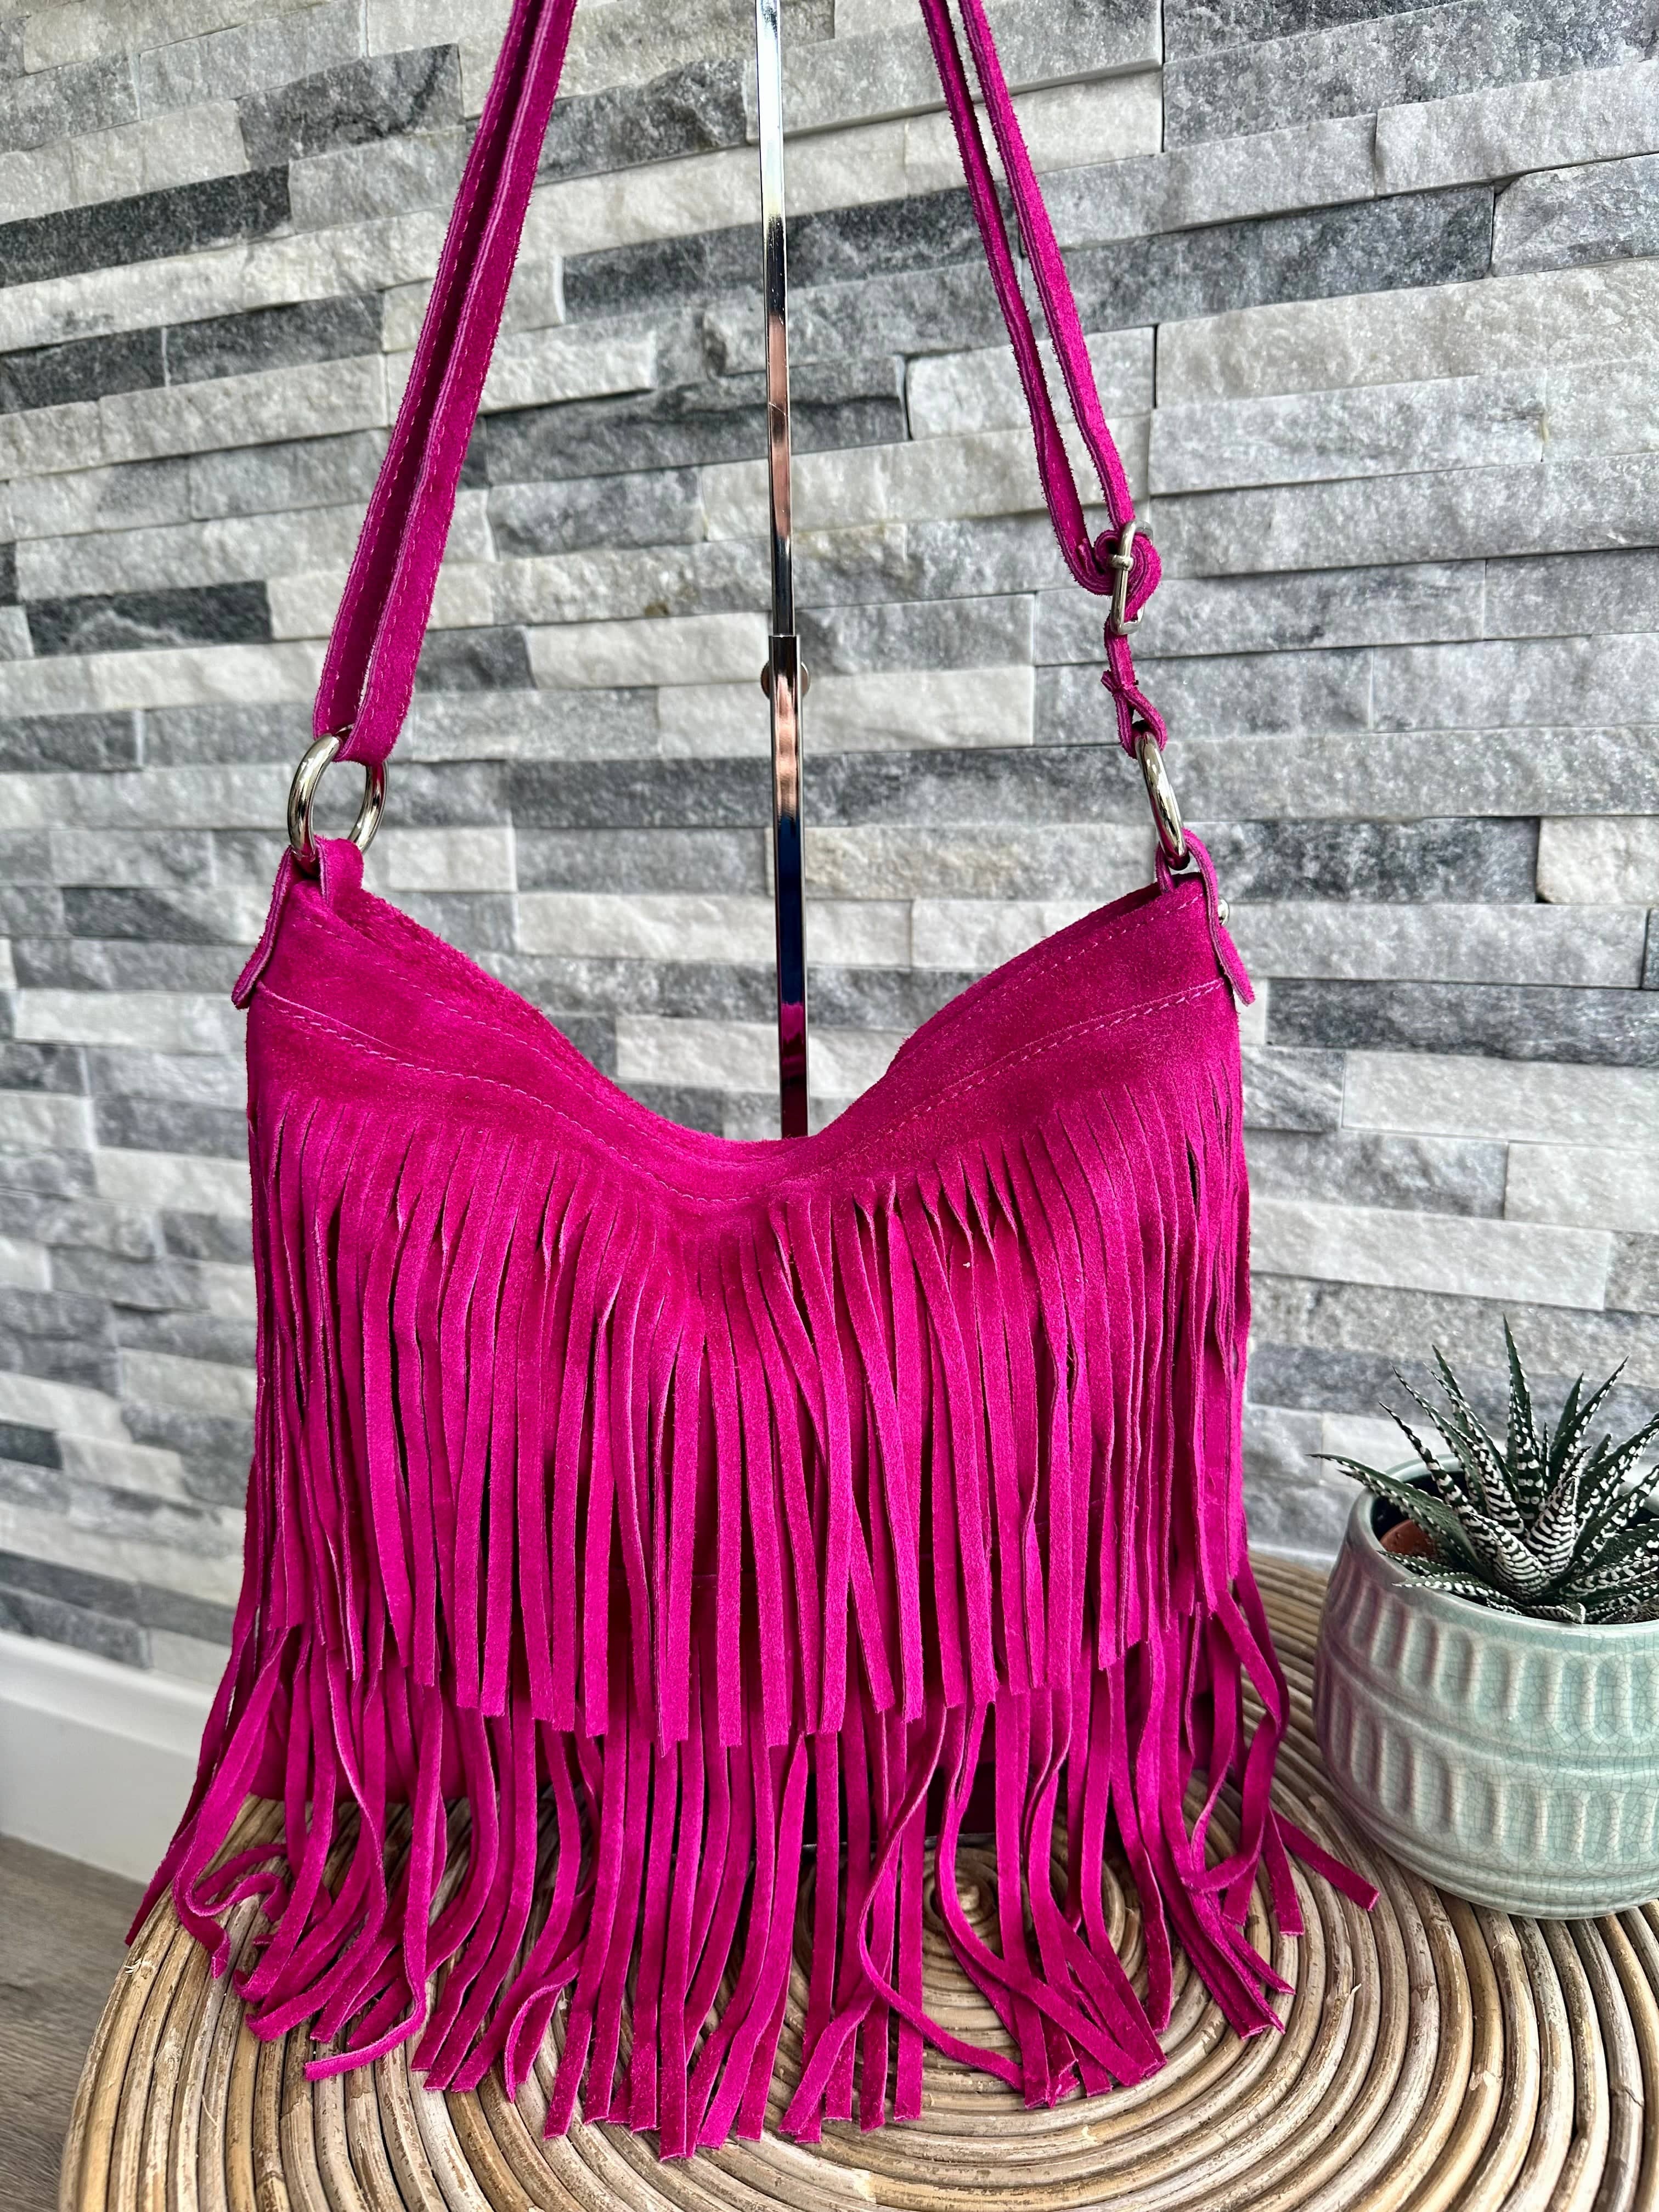 luscious scarves Cerise Hot Pink Italian Suede Leather Tassel, Fringe Crossbody / Shoulder Bag . 7 Colours Available